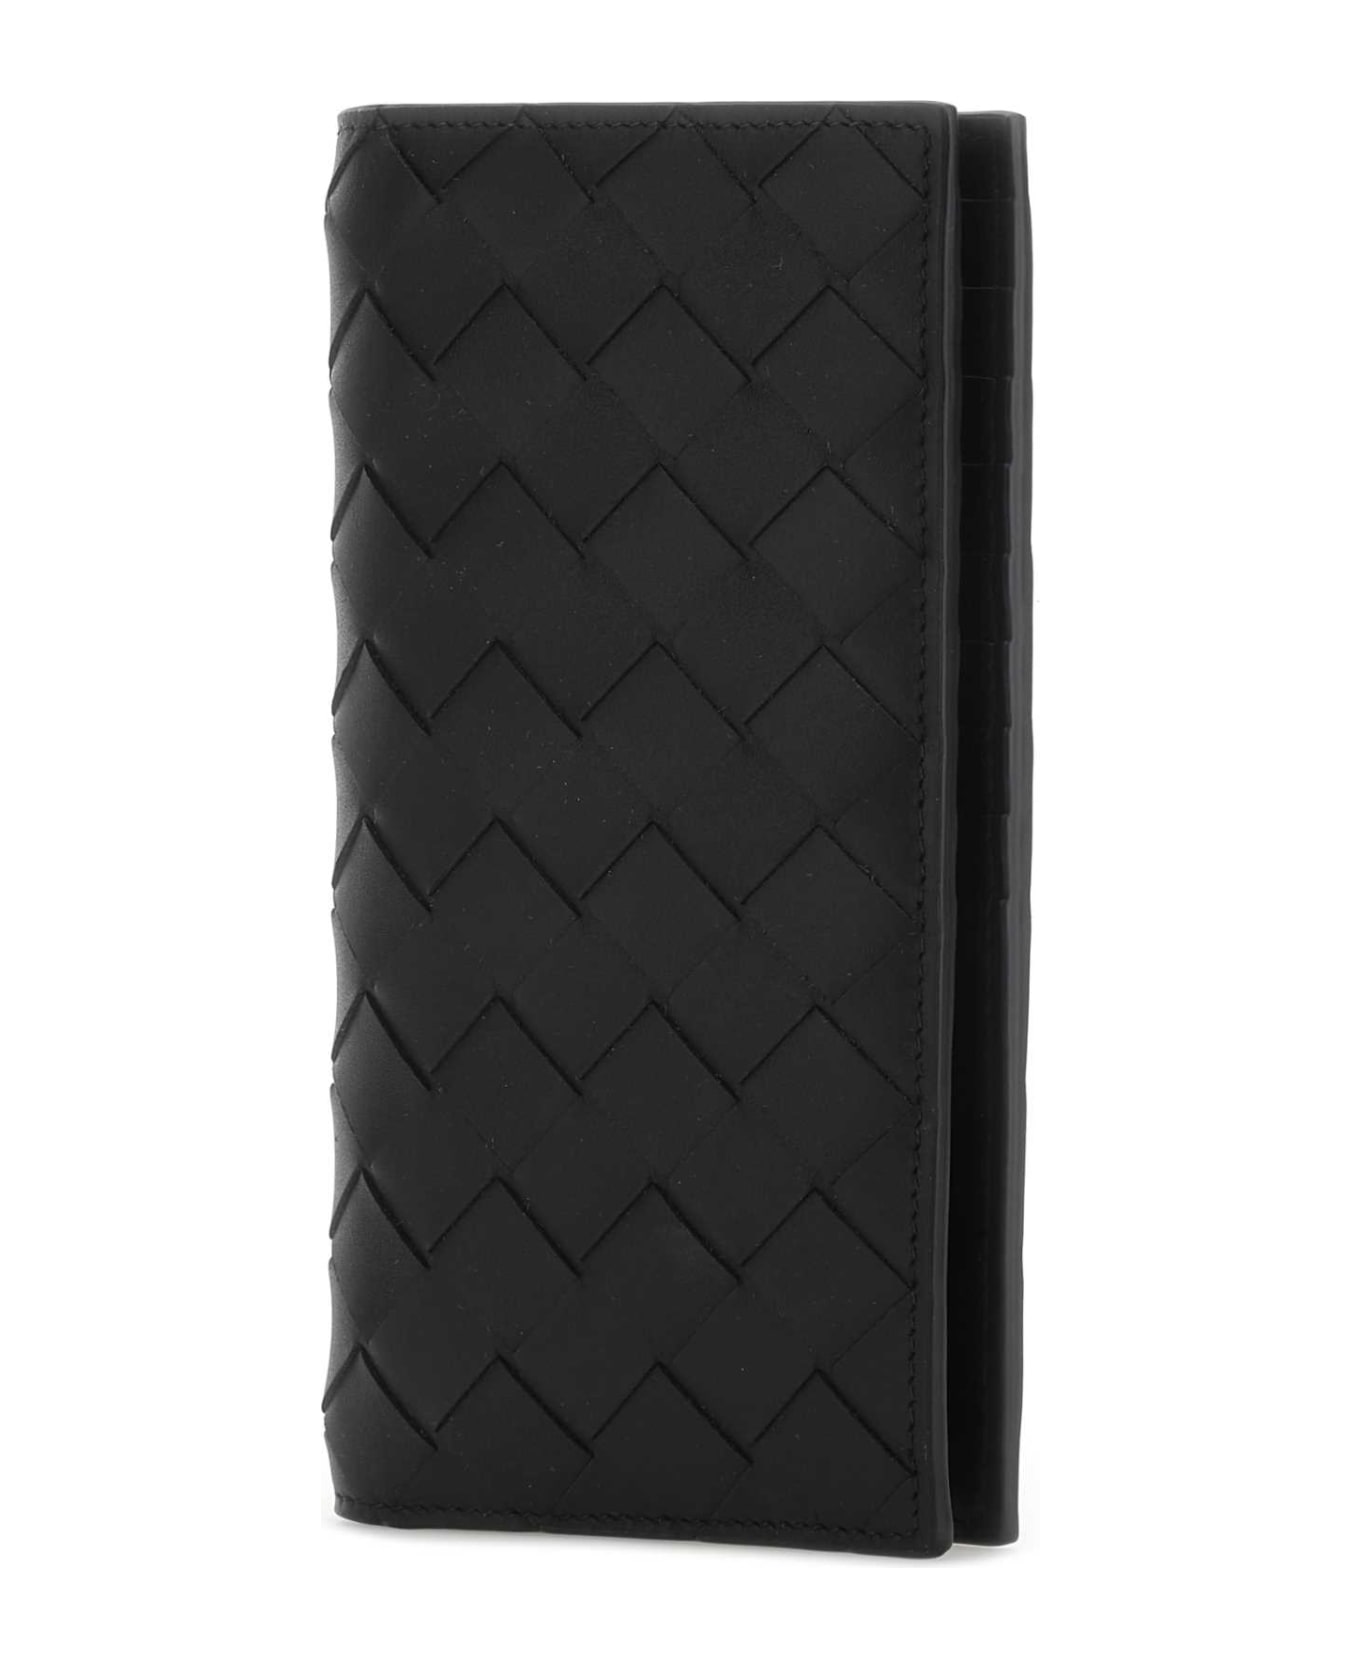 Bottega Veneta Black Leather Wallet - BLACKSILVER